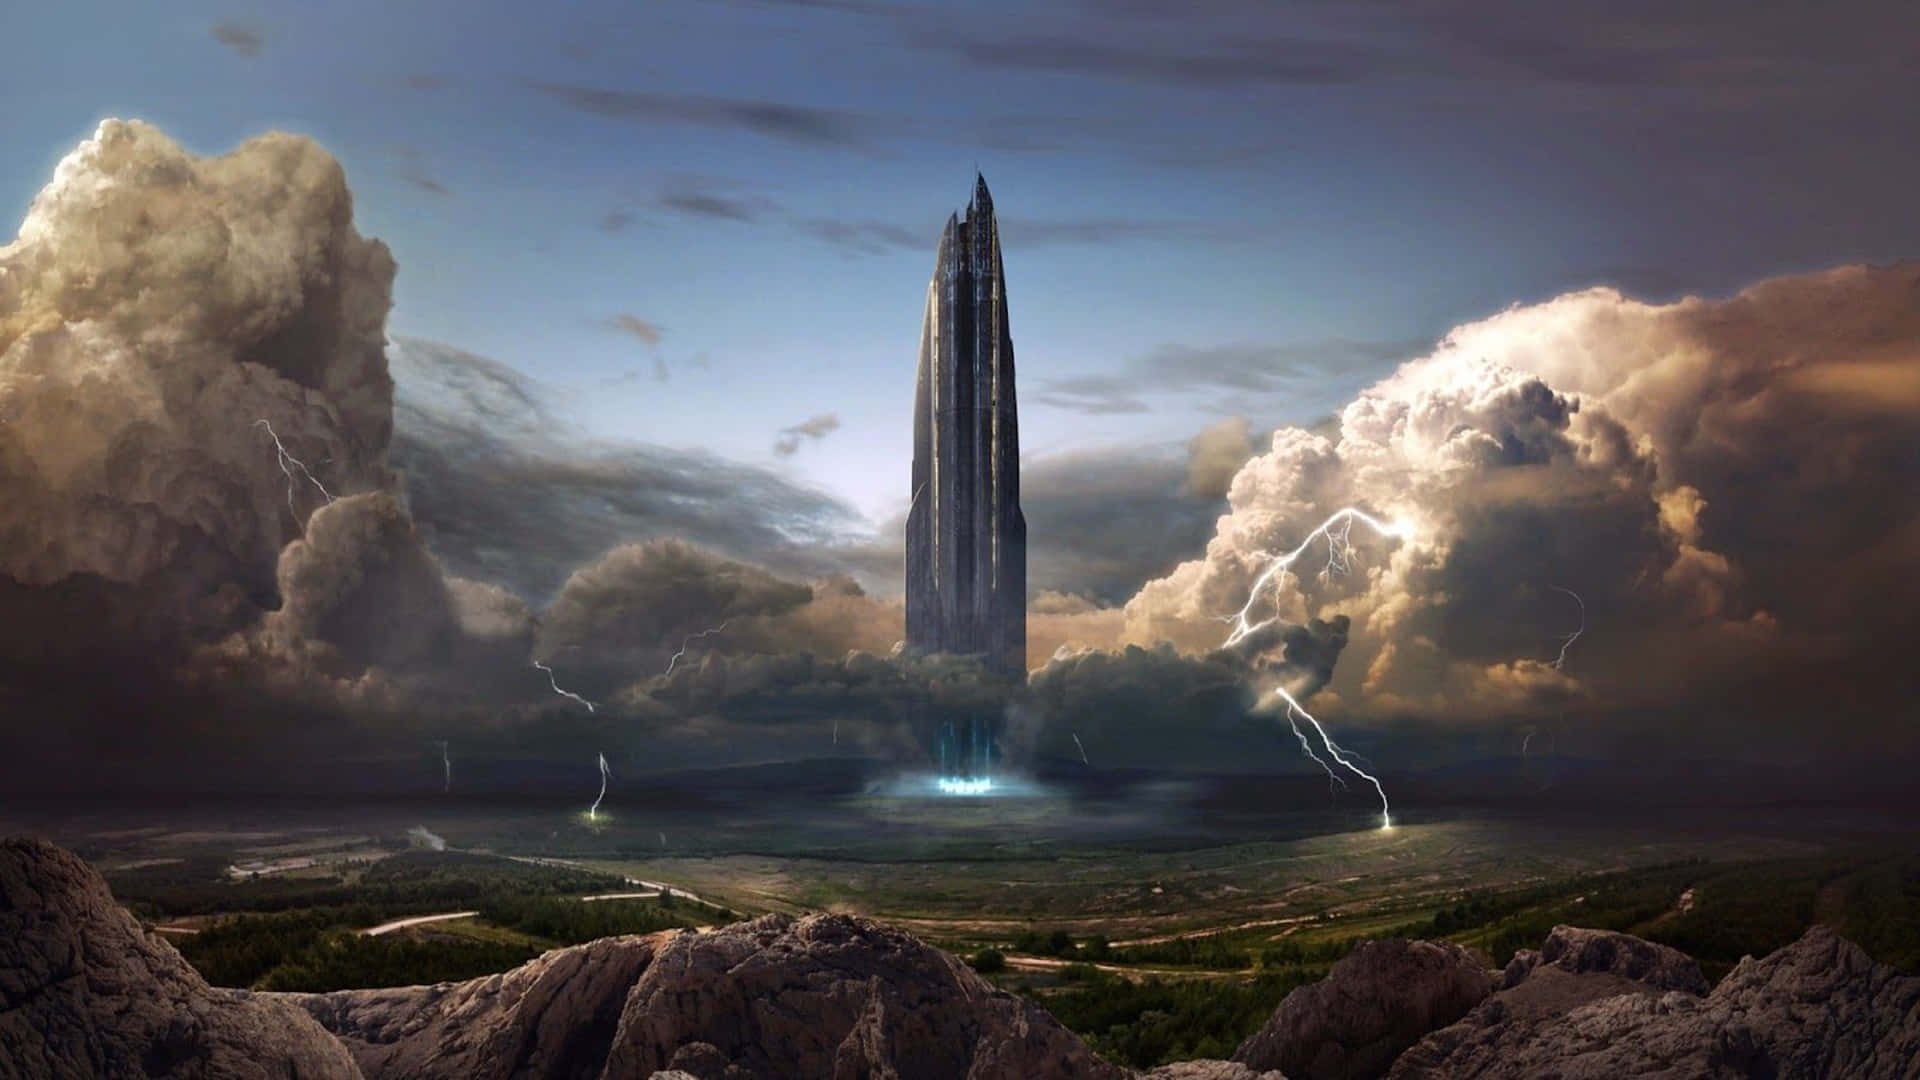 "Explore the vast world of Civilization V in stunning 1080p"